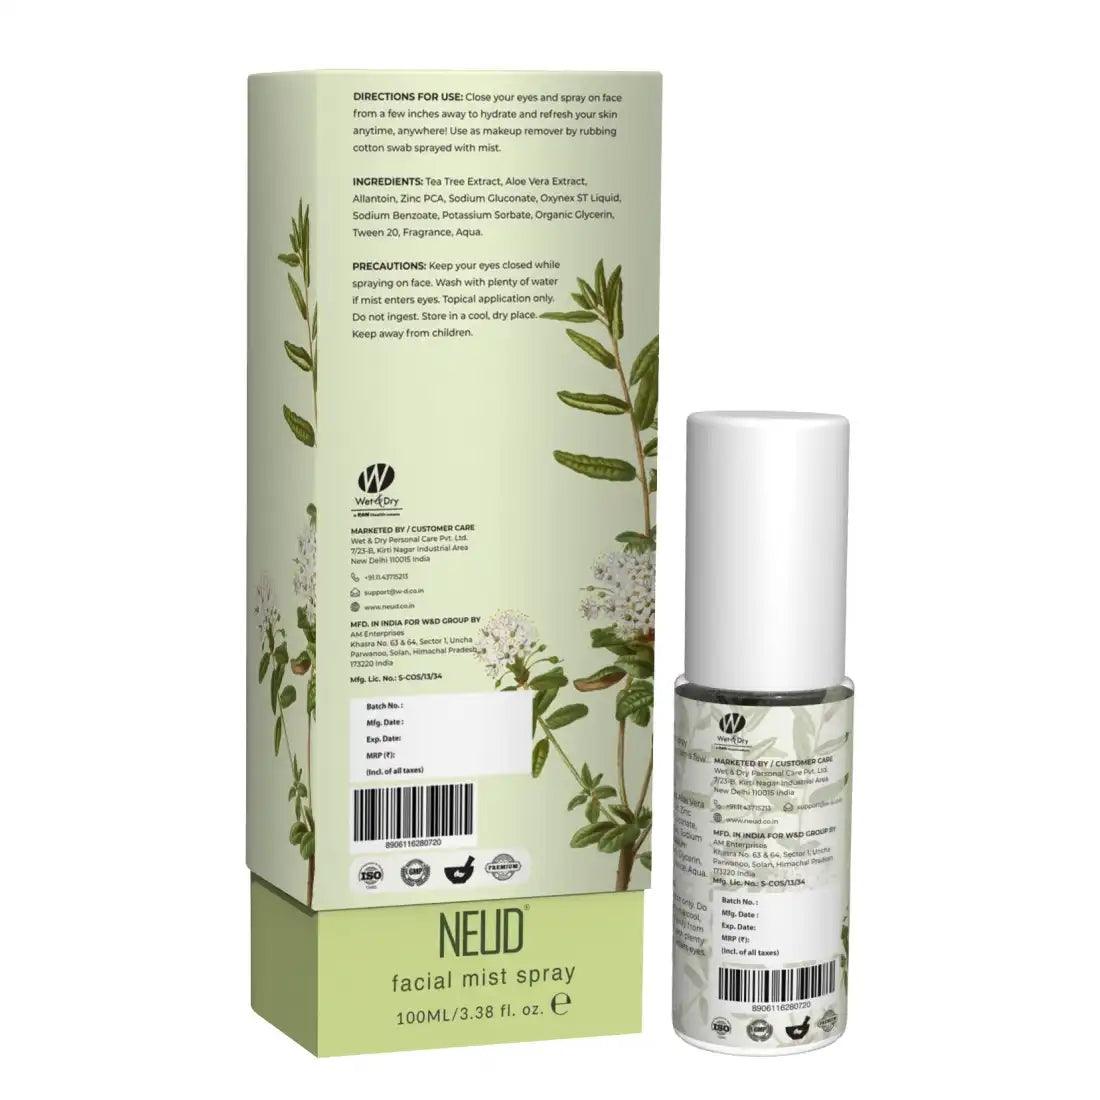 NEUD Tea Tree Facial Mist Spray is shipped worldwide - everteen-neud.com